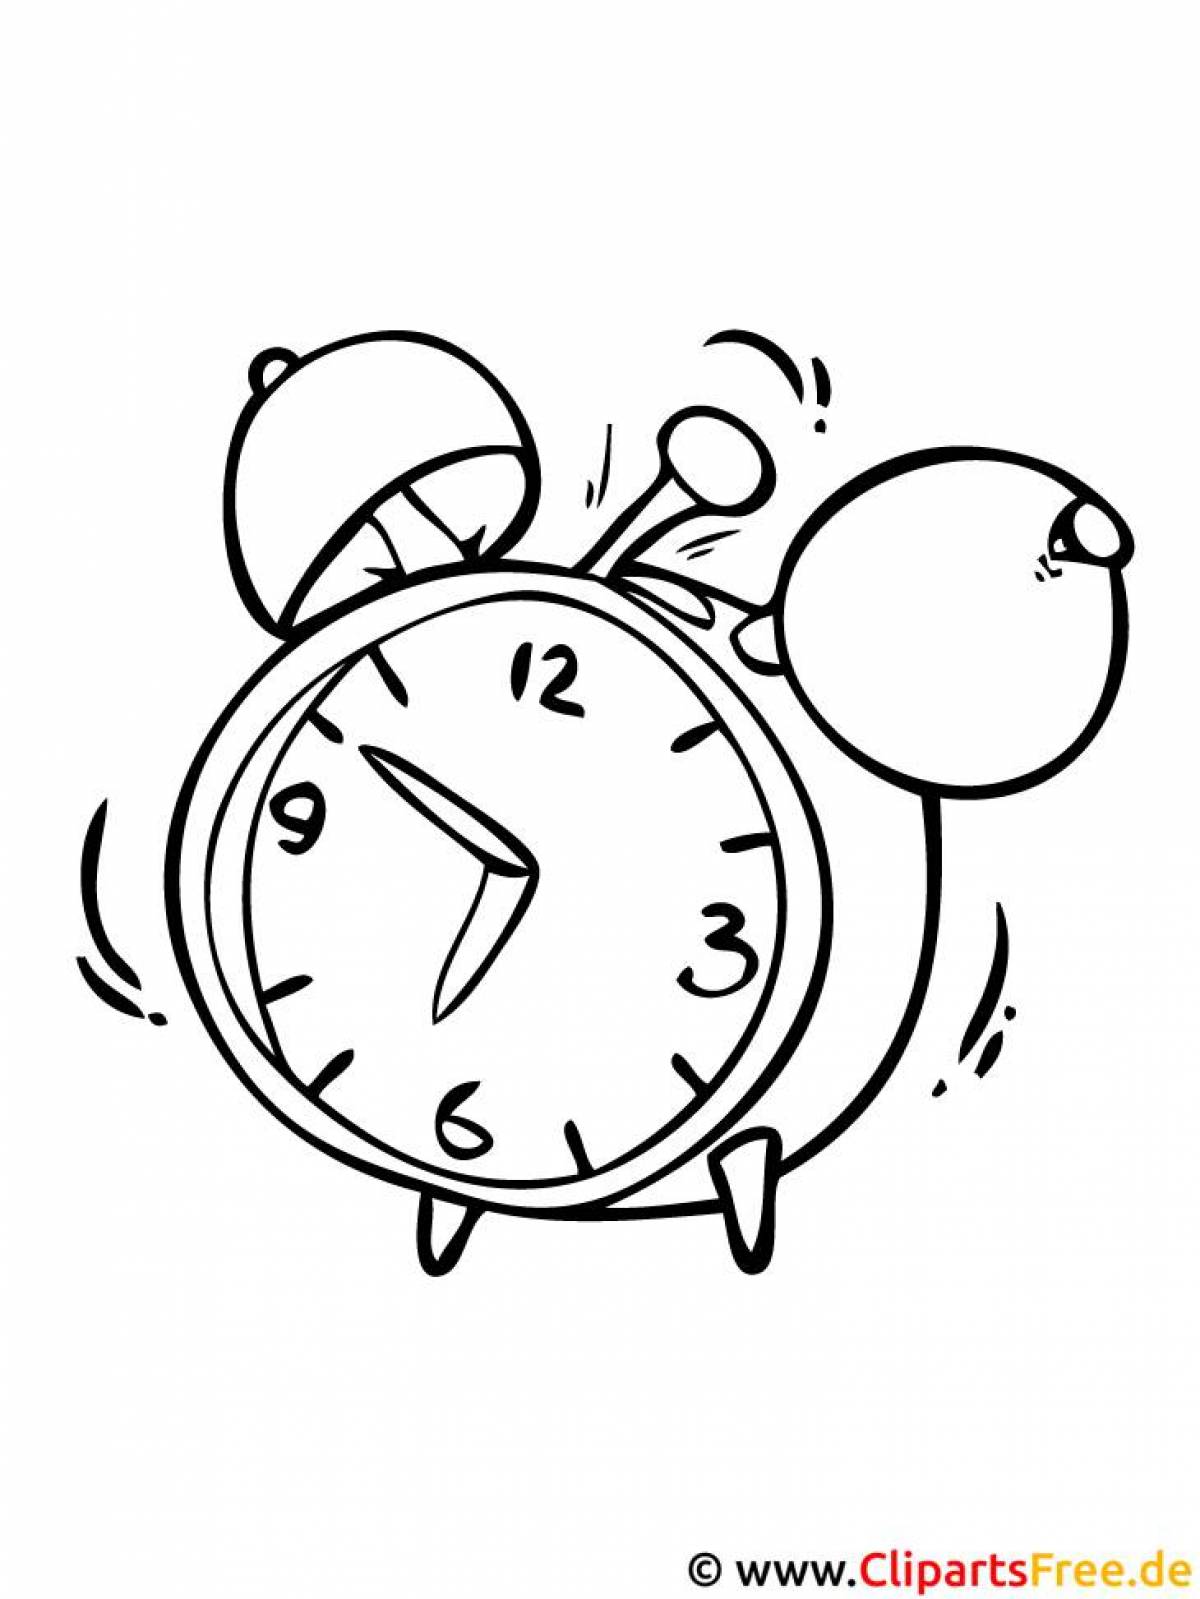 Joyful alarm clock coloring page